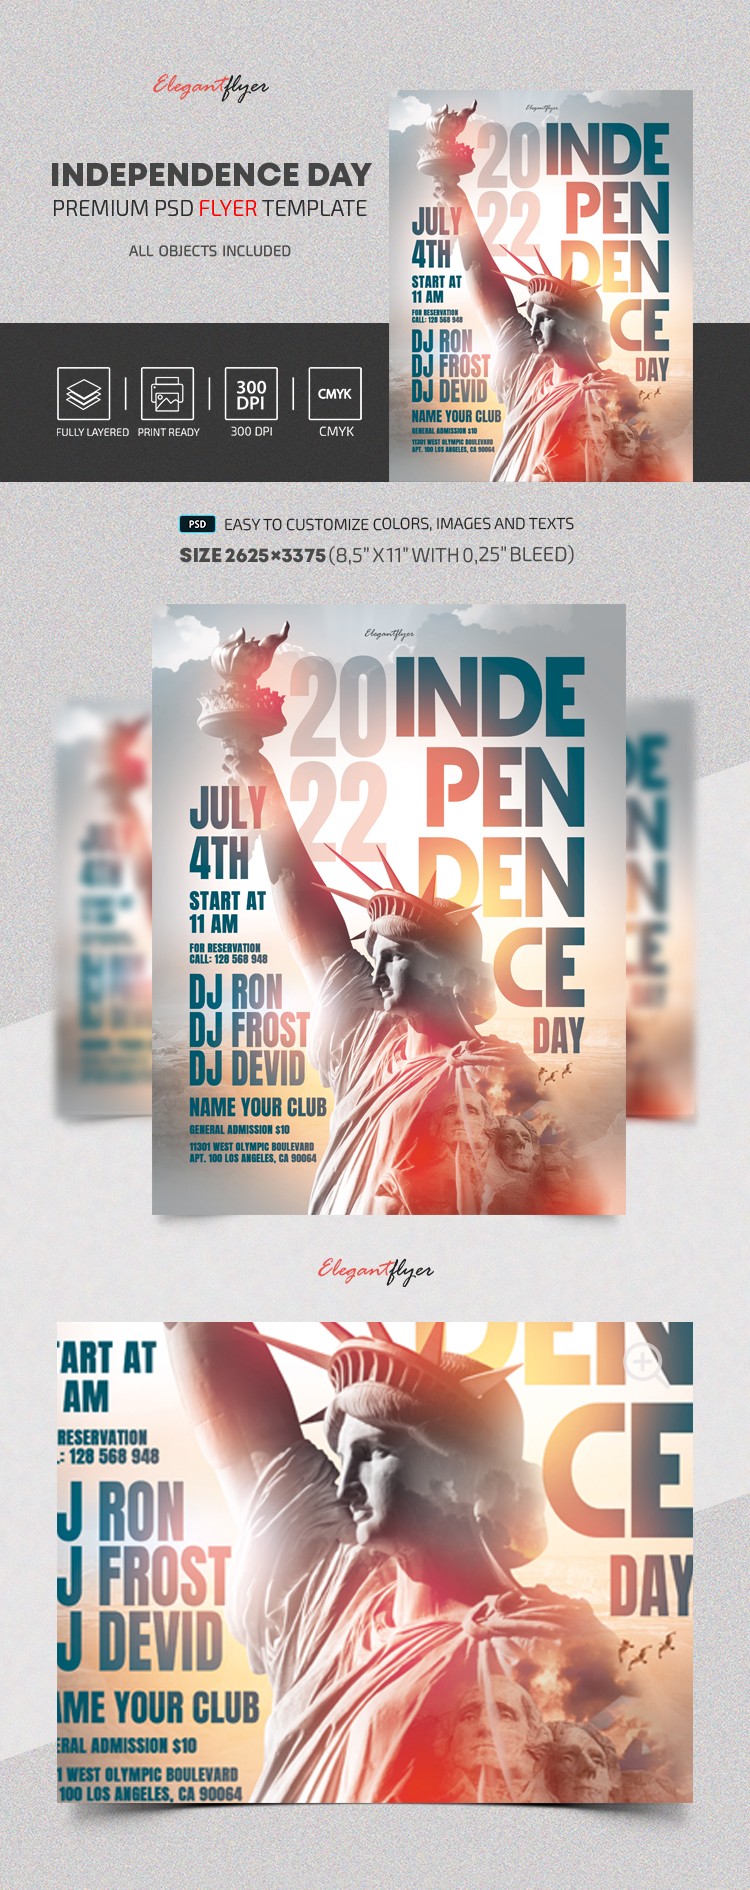 Independence Day Flyer by ElegantFlyer